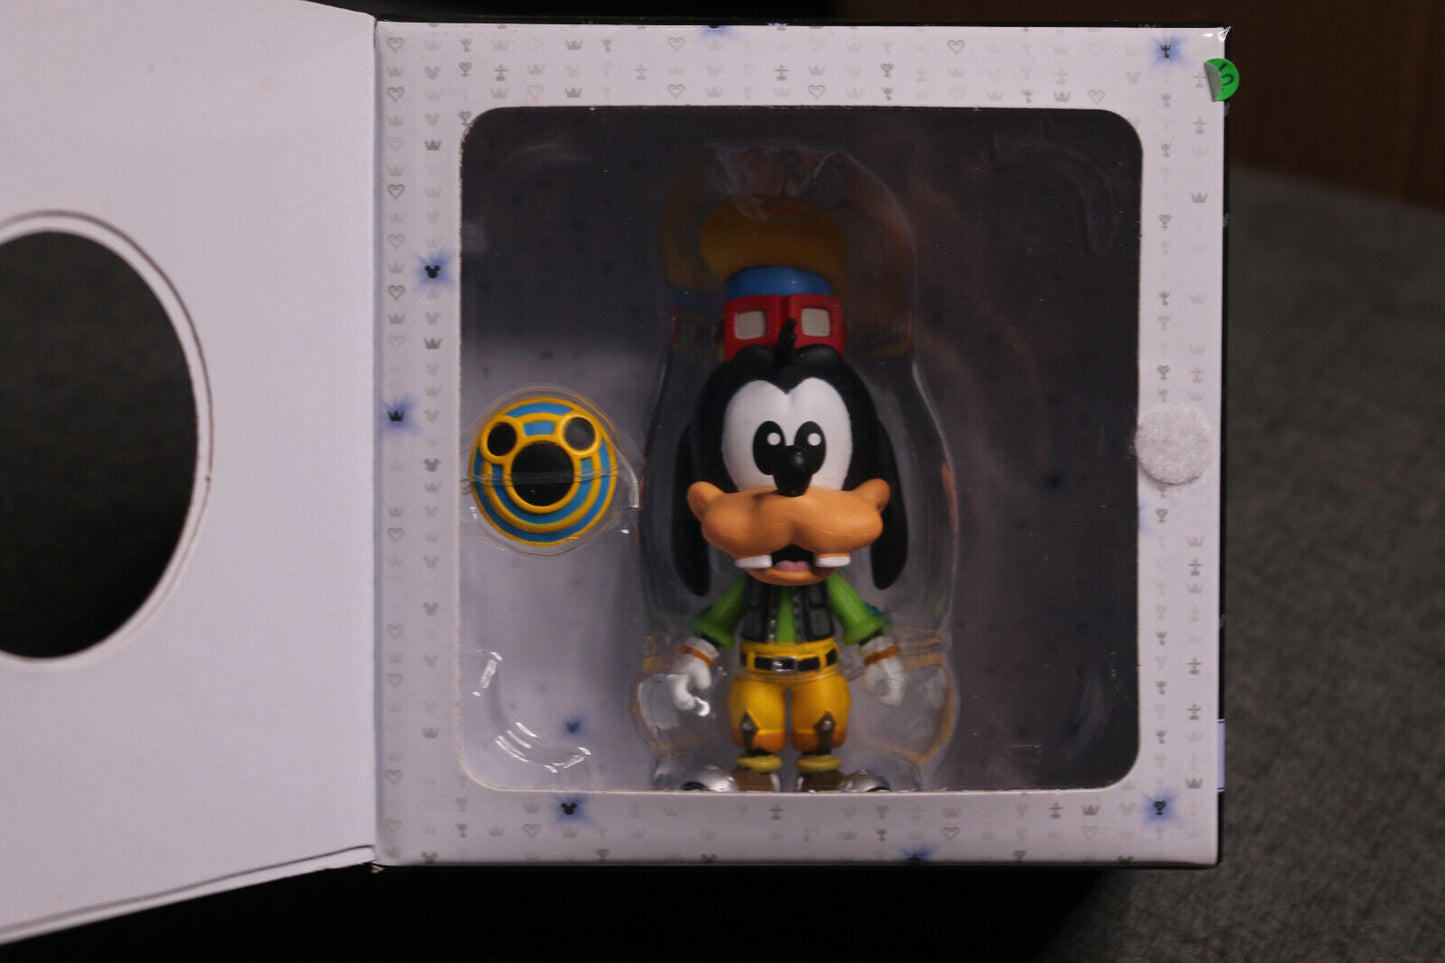 Brand New Goofy Kingdom Hearts Iii 5 Star Funko Action Vinyl Figure Disney Toy